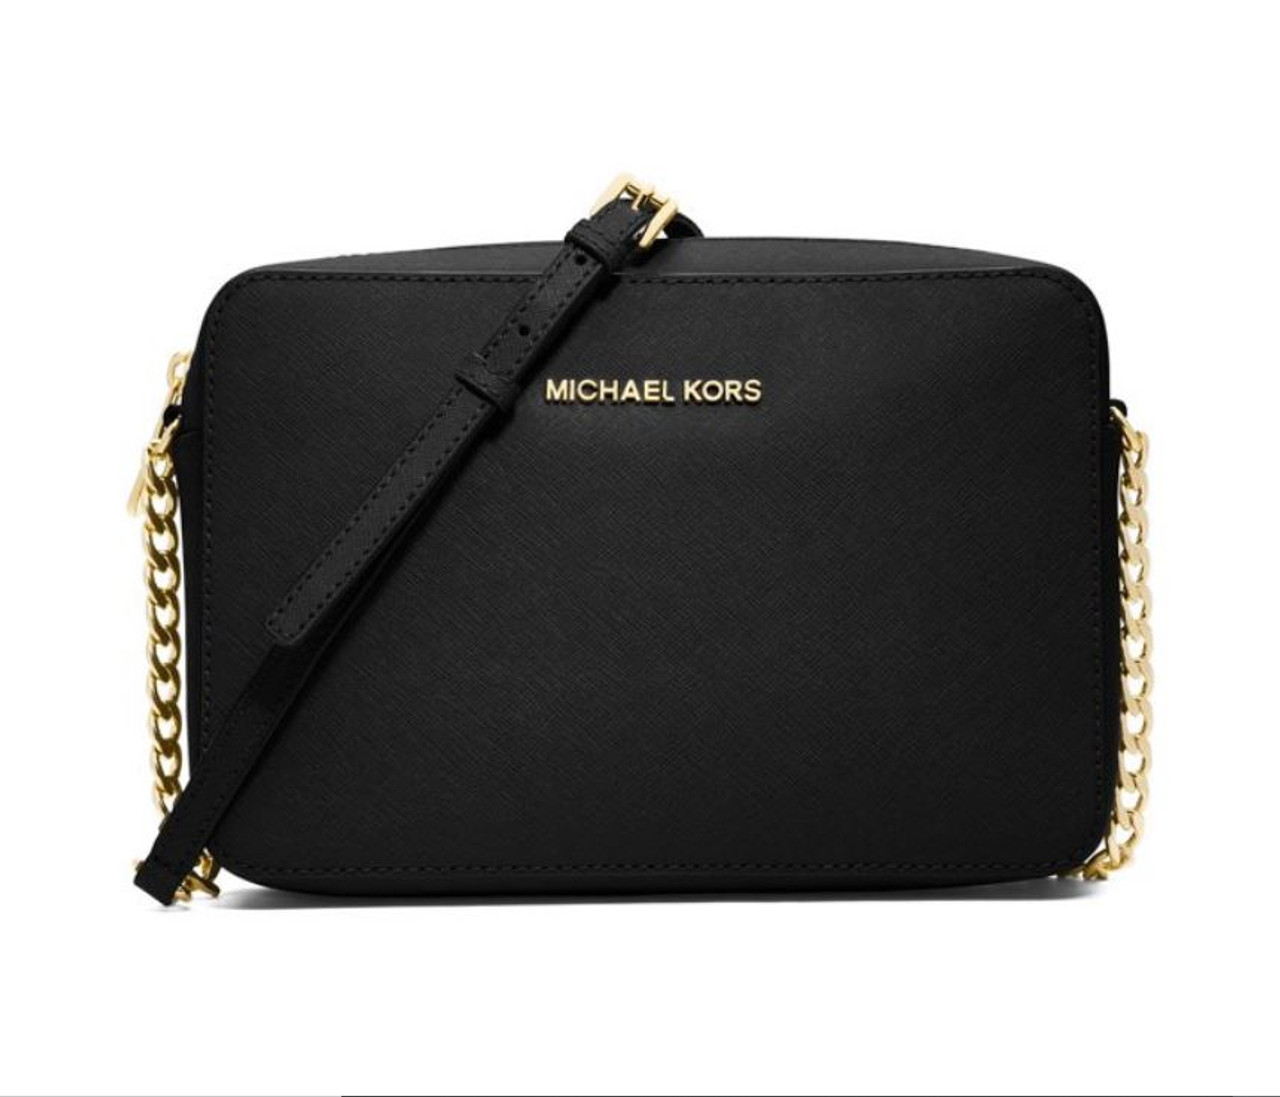 Michael kors crossbody bag Price : BD 58 Size :(24 cm x 19 cm